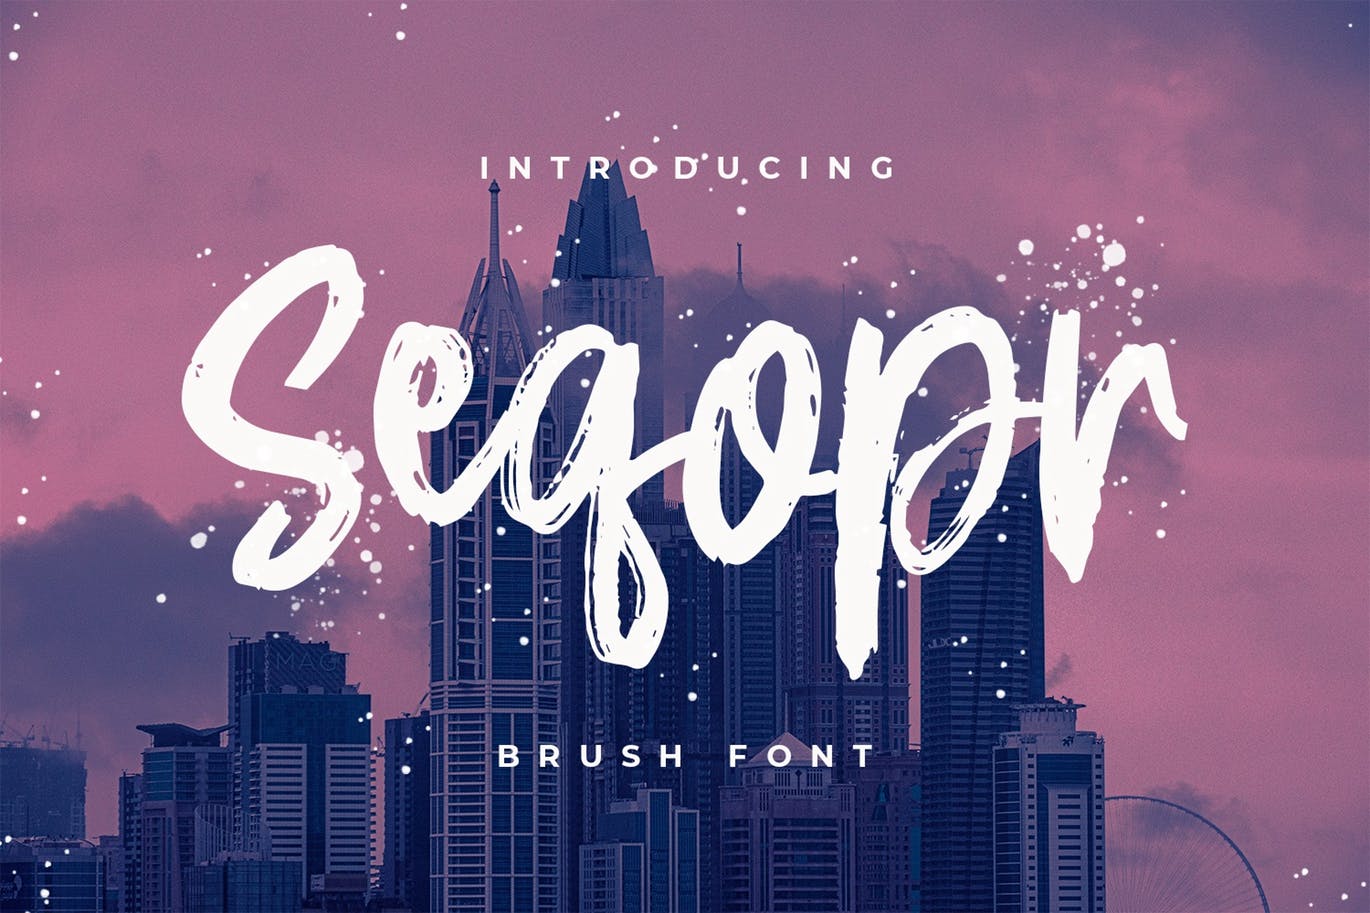 Logo/印刷设计英文笔刷字体素材库精选 Seqopr – The Brush Font插图